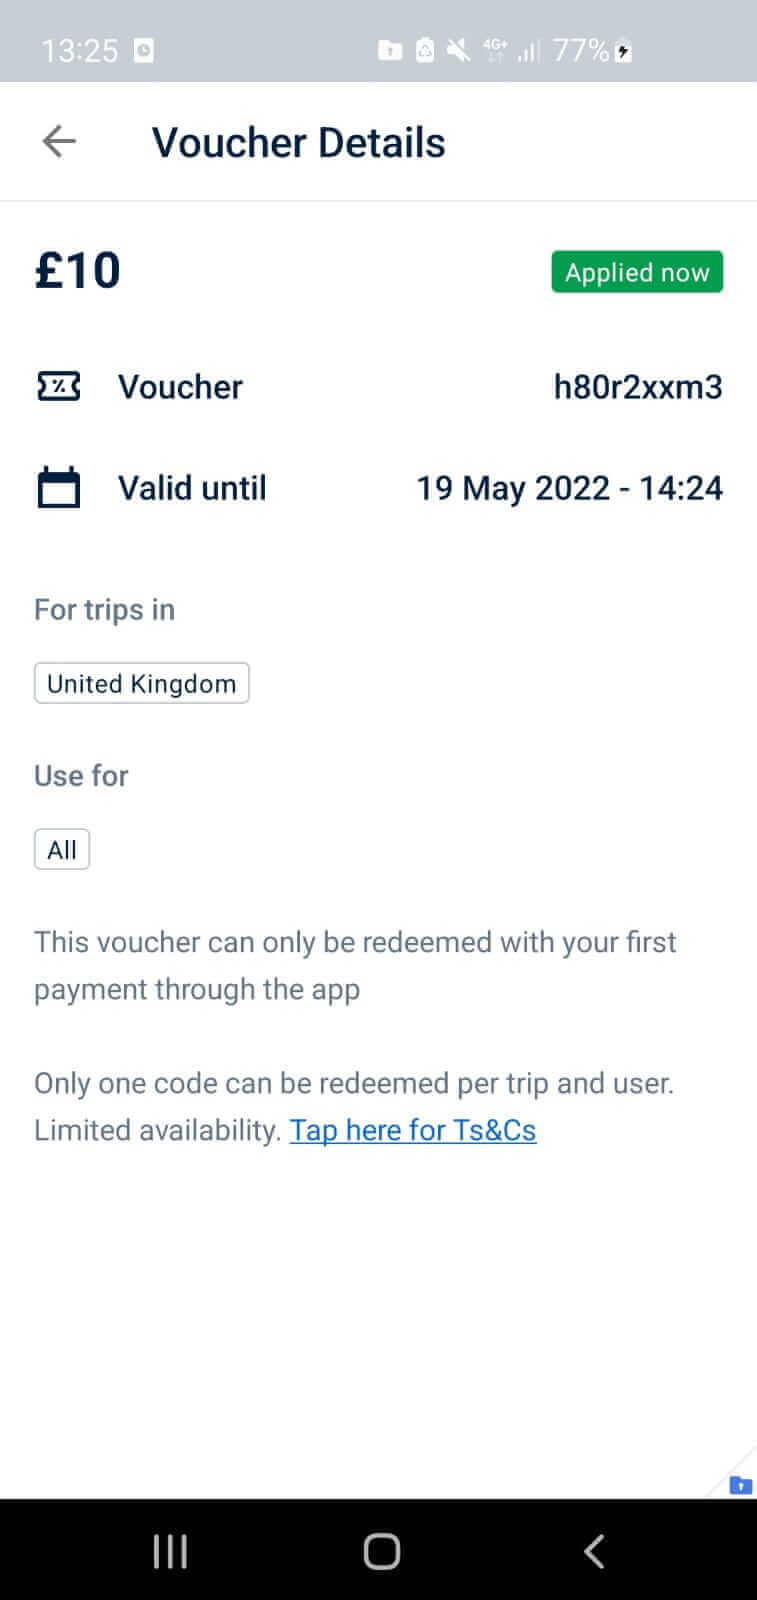 Free Now London voucher £10 GBP discount credits - code h80r2xxm3 valid 30 days.